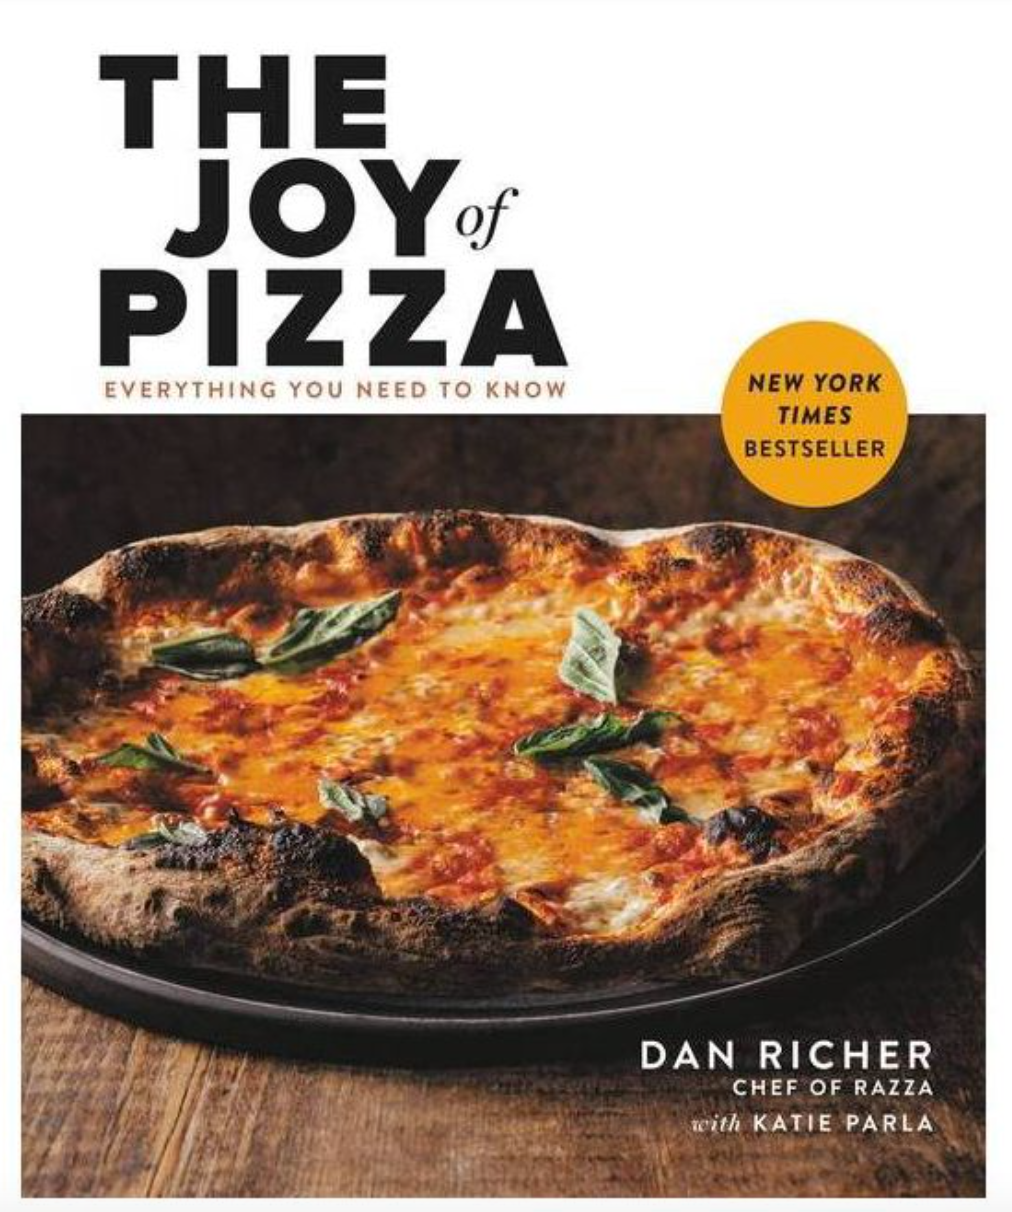 THE JOY OF PIZZA